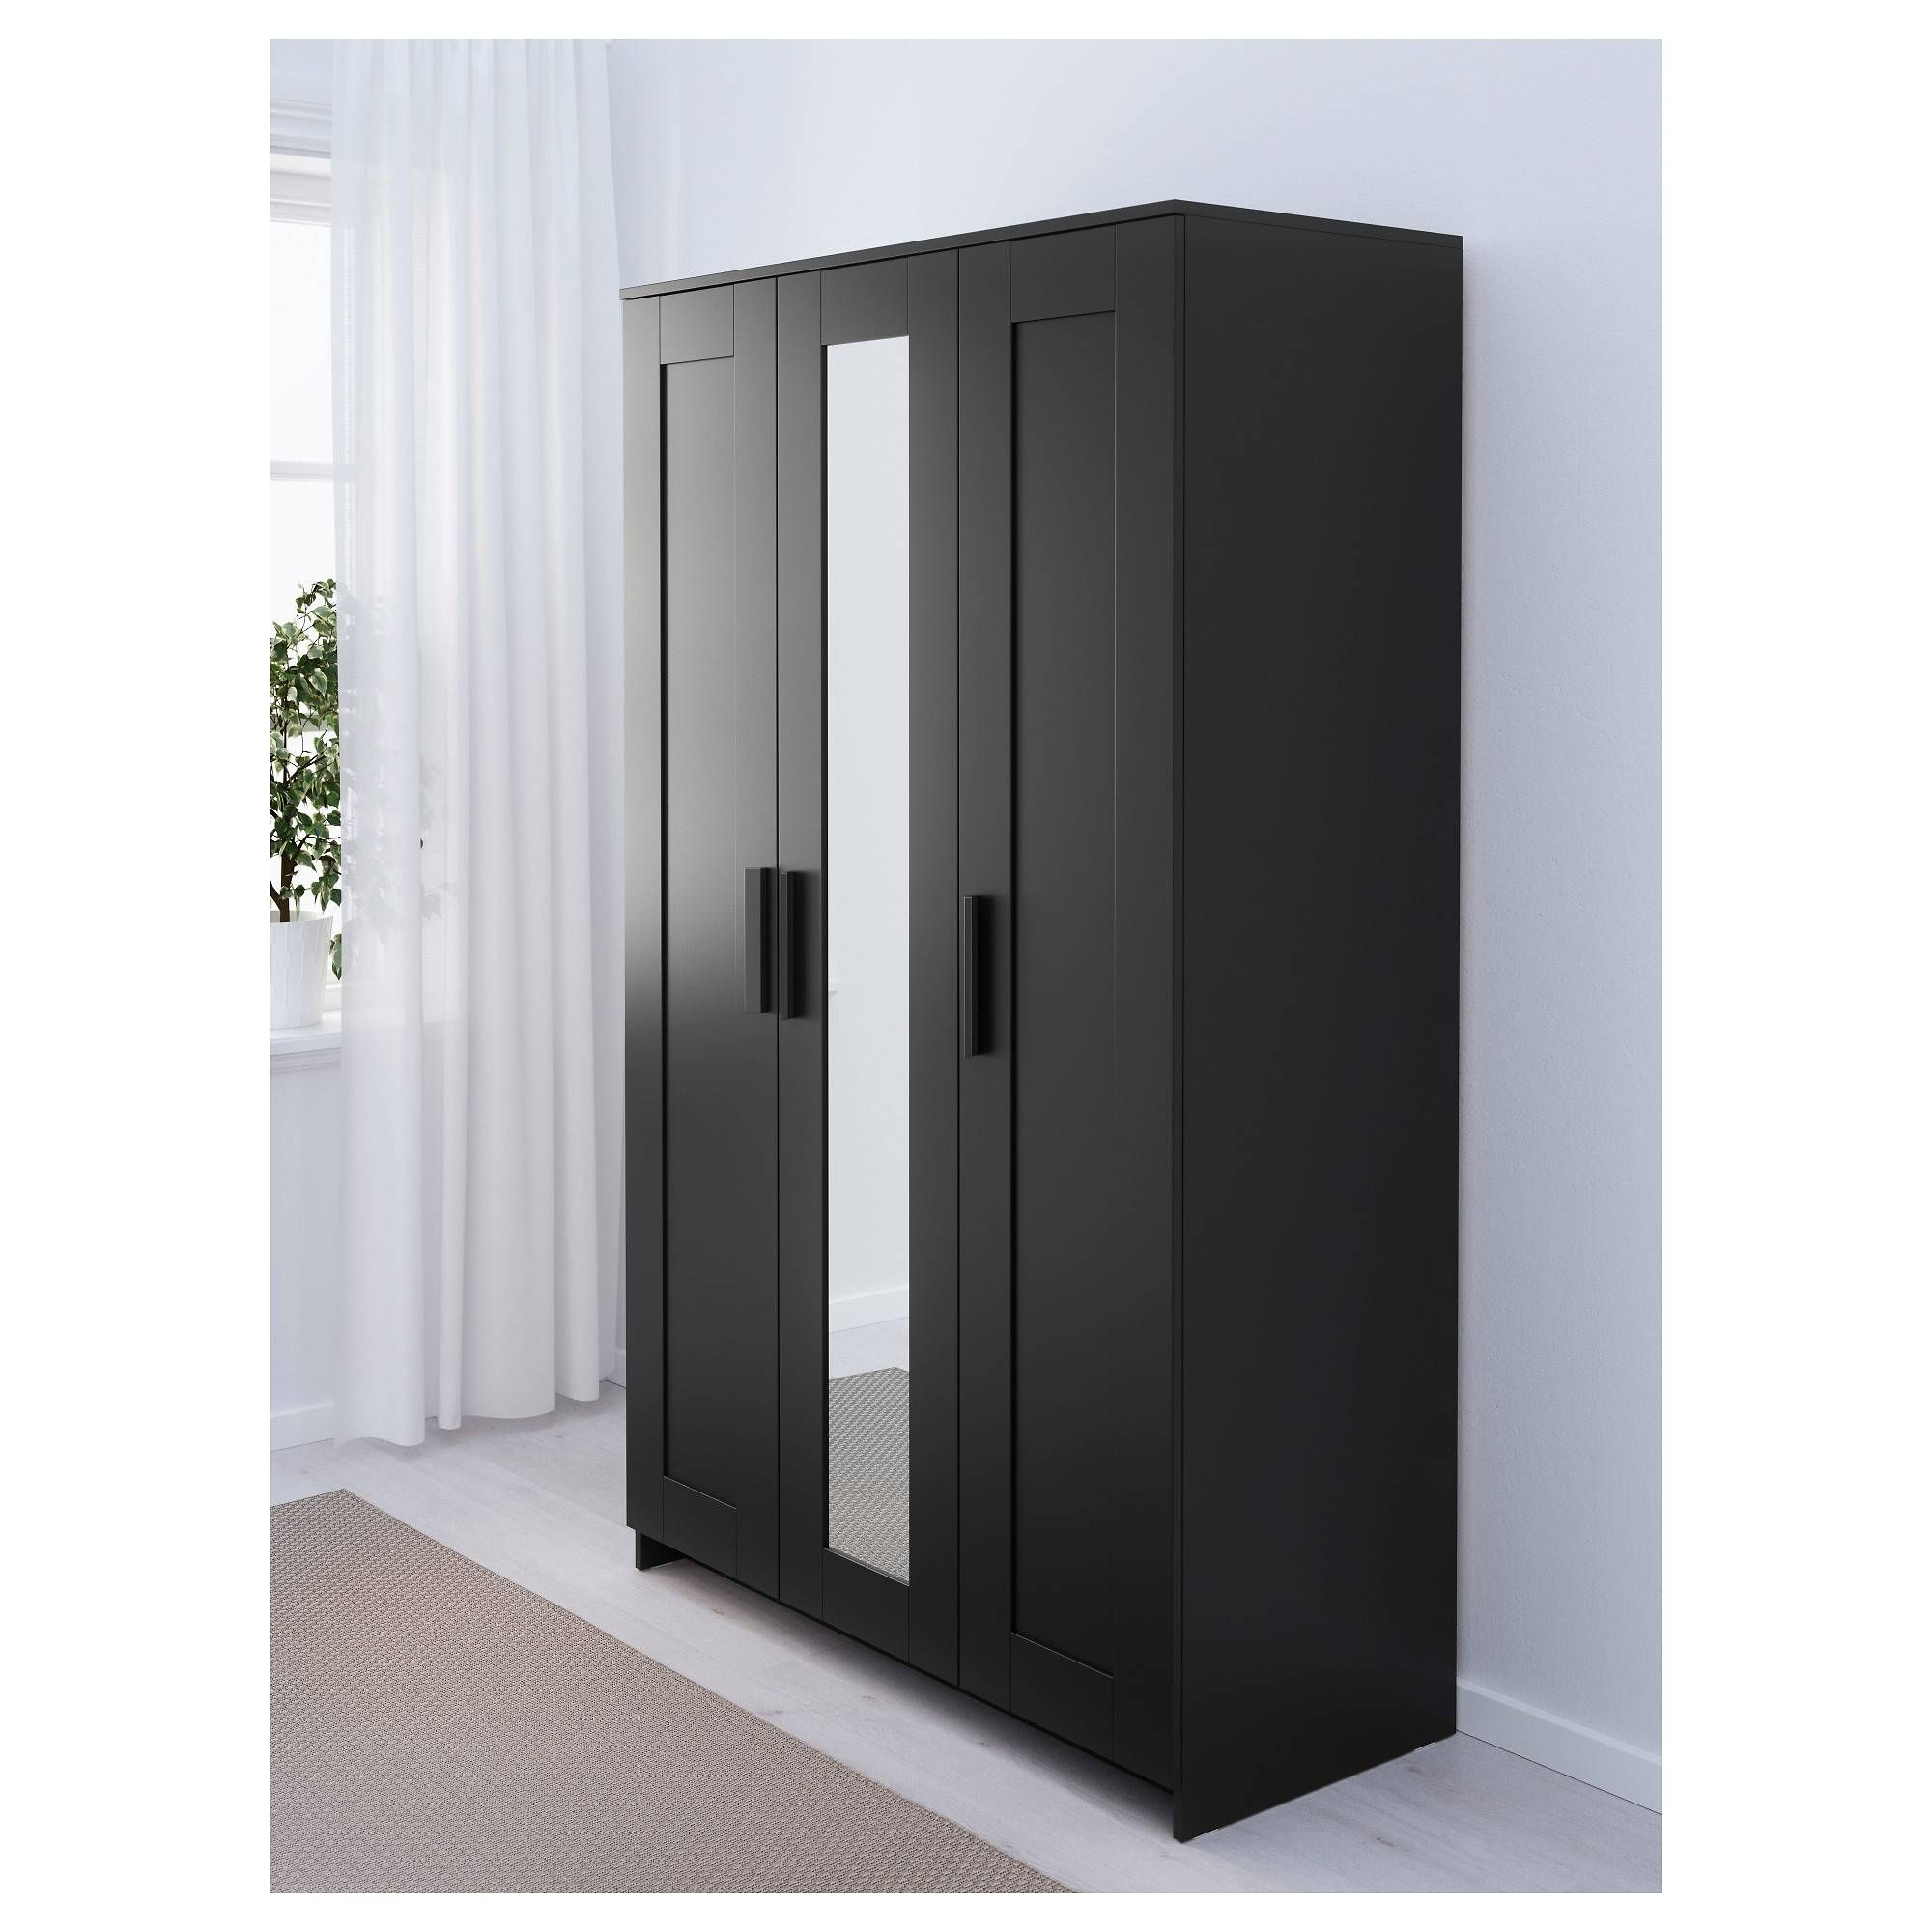 Brimnes Wardrobe With 3 Doors – Black – Ikea Within Black Wardrobes (View 2 of 15)